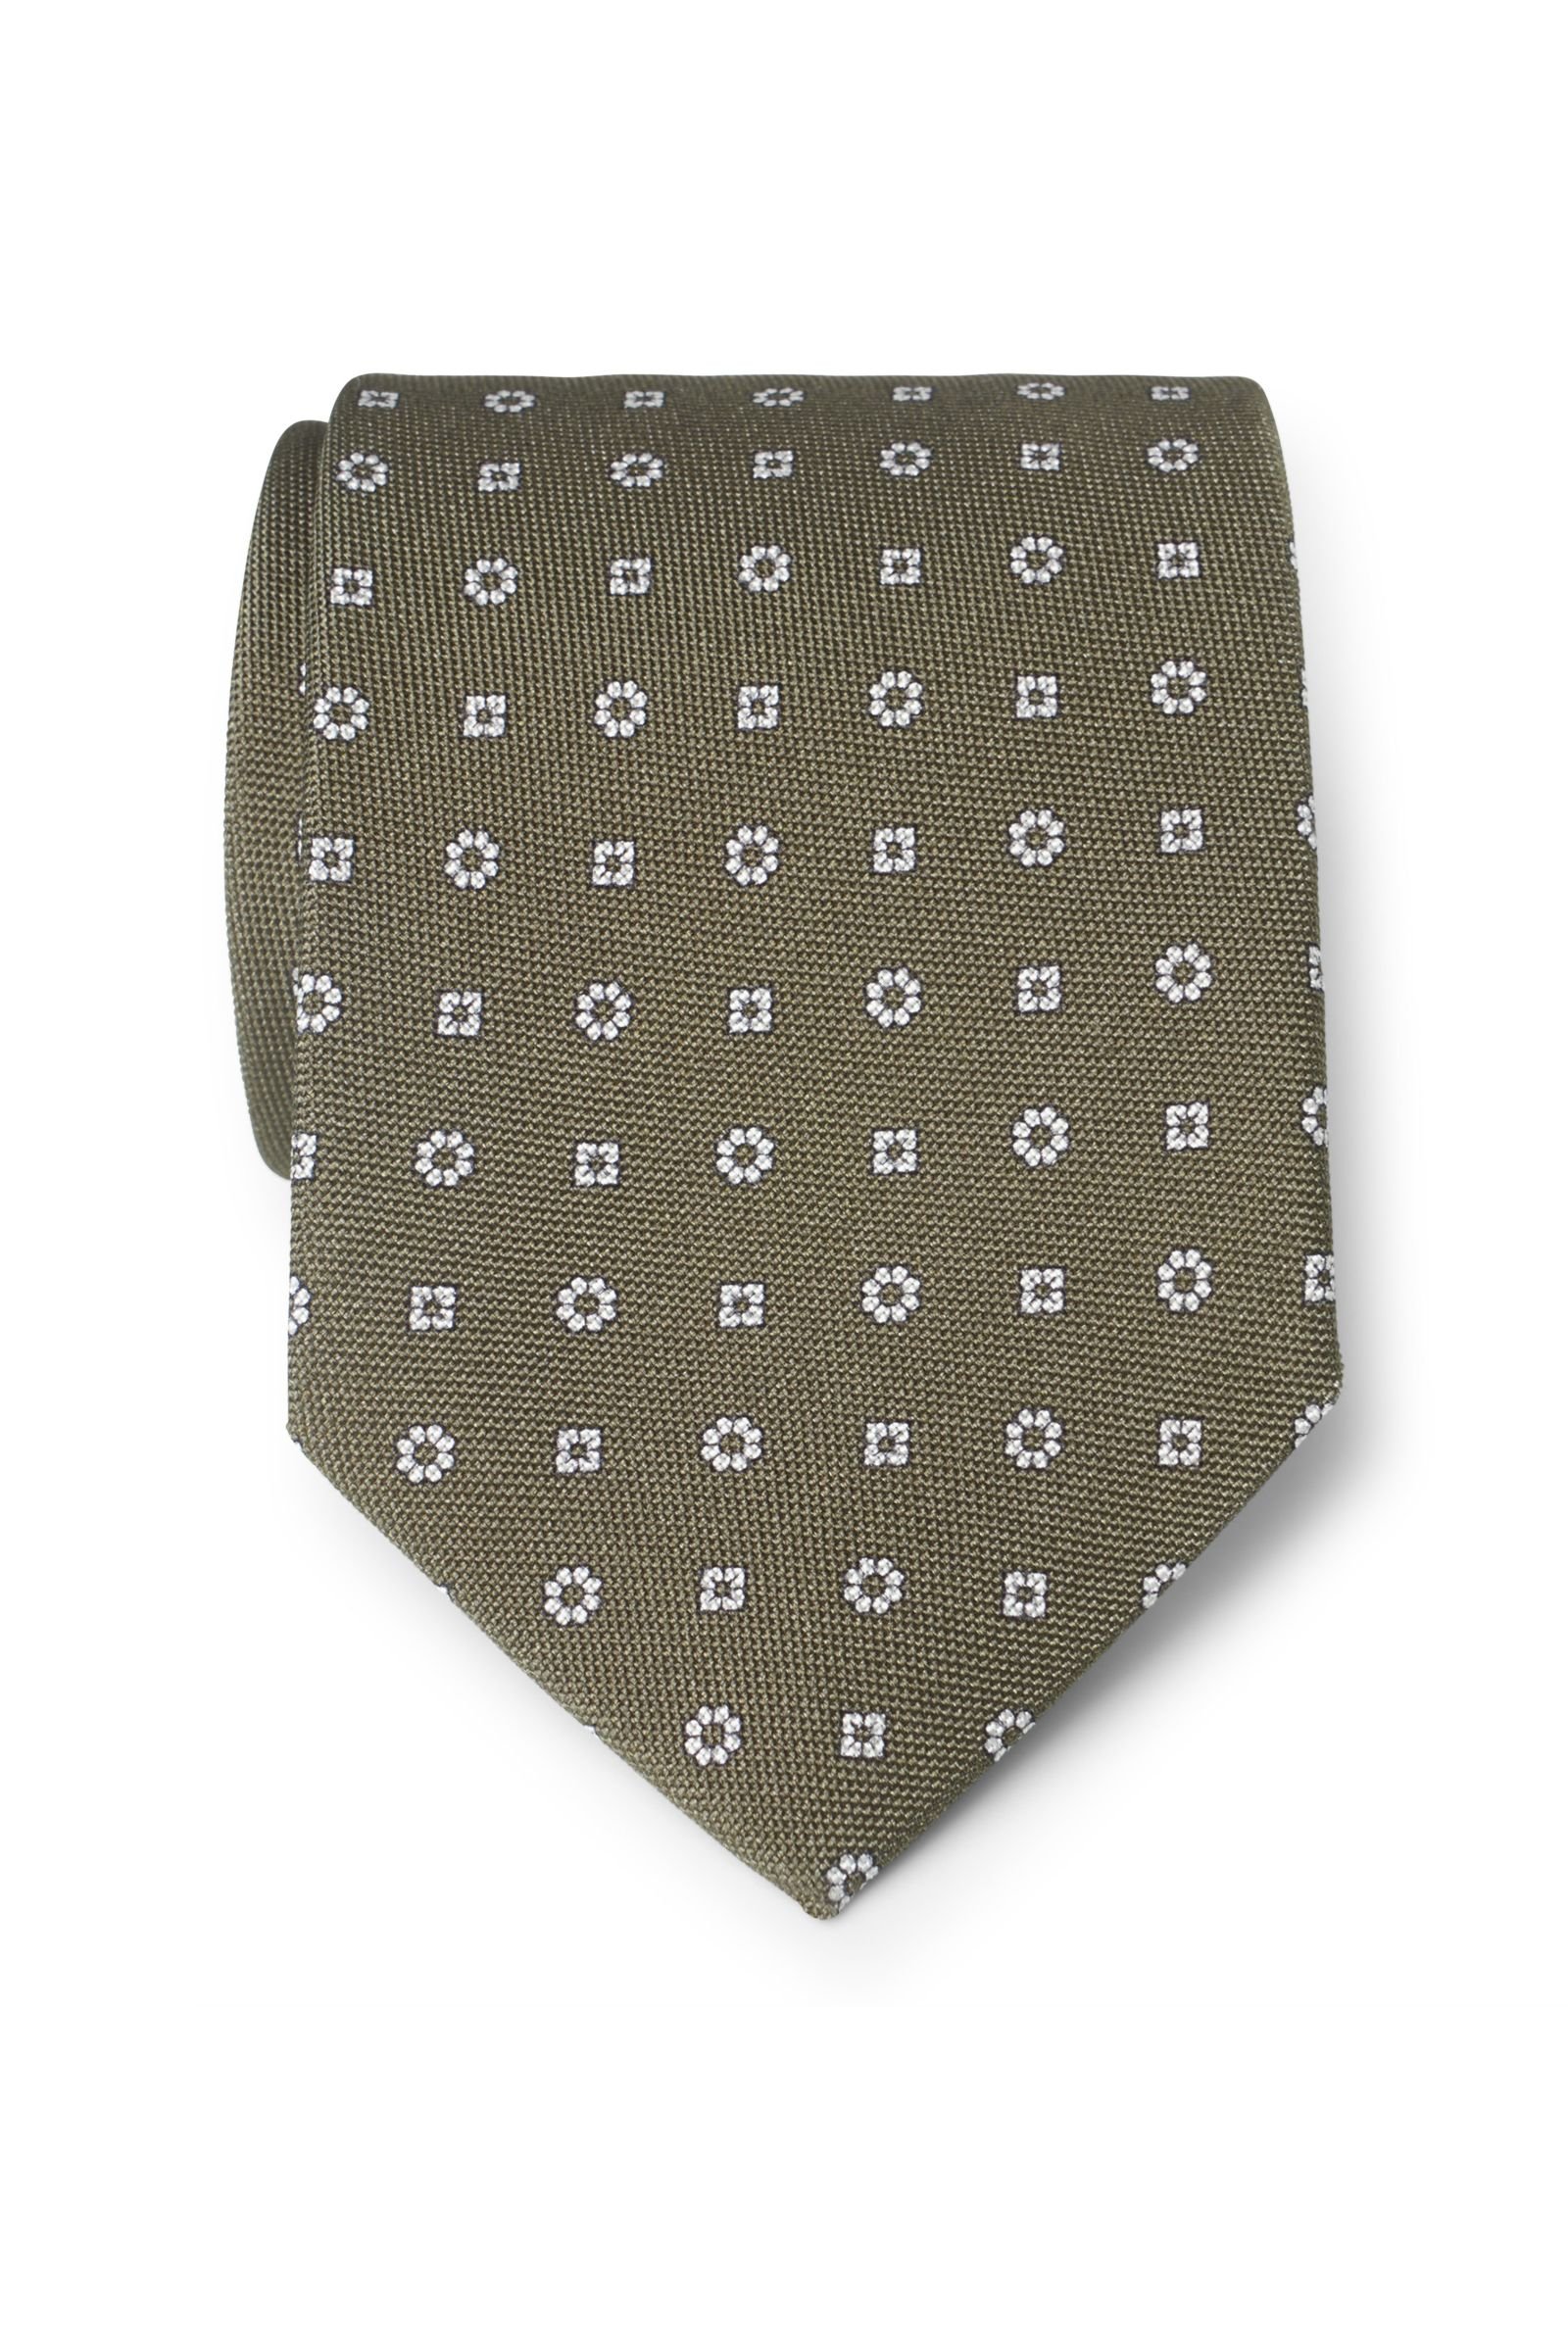 Silk tie olive patterned